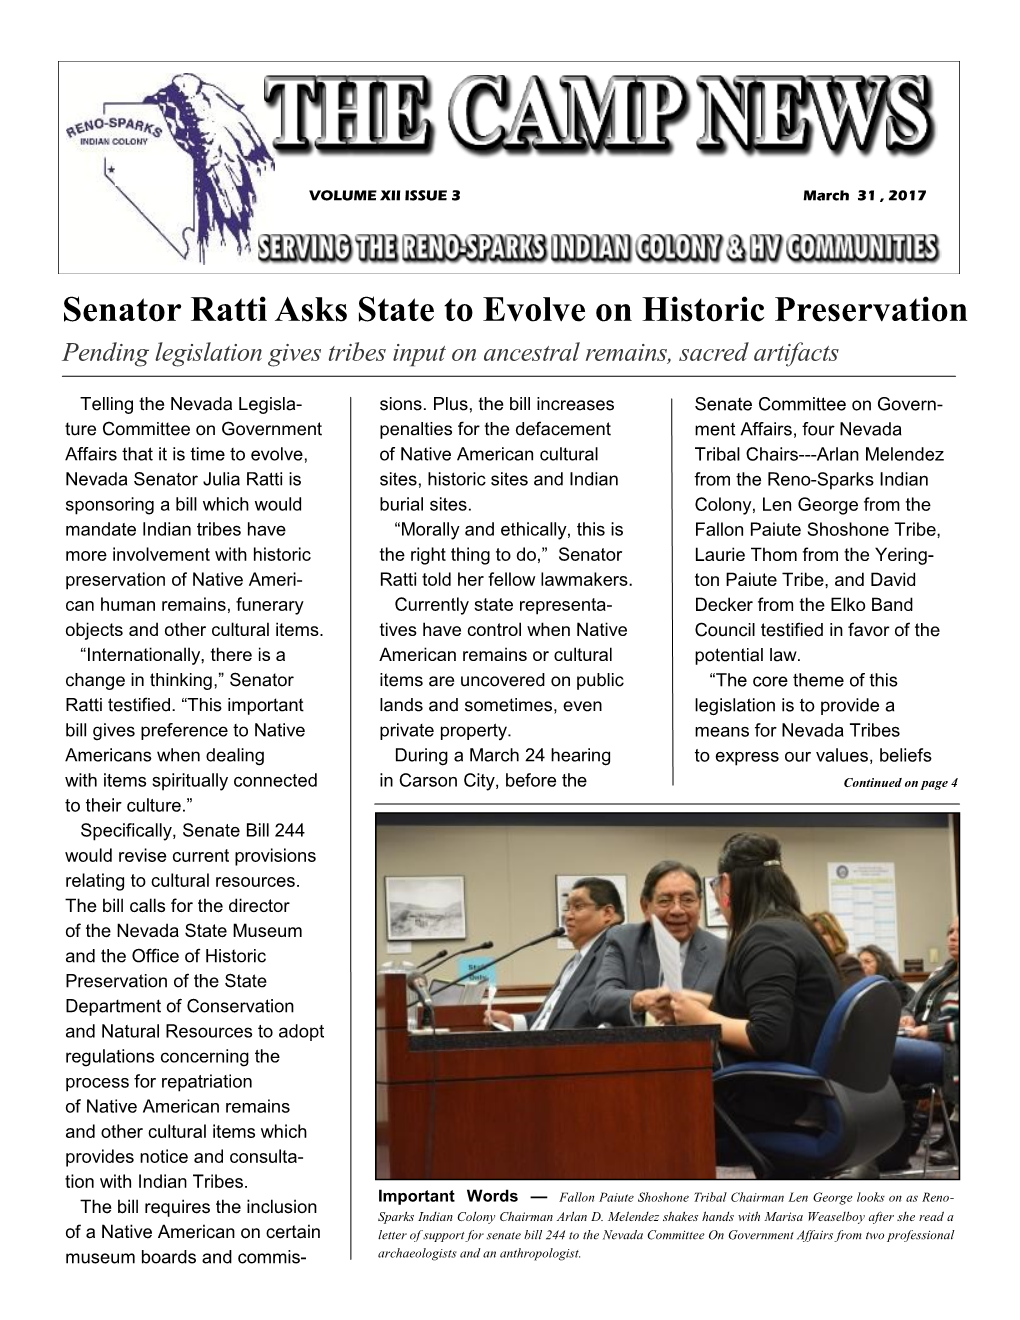 Senator Ratti Asks State to Evolve on Historic Preservation